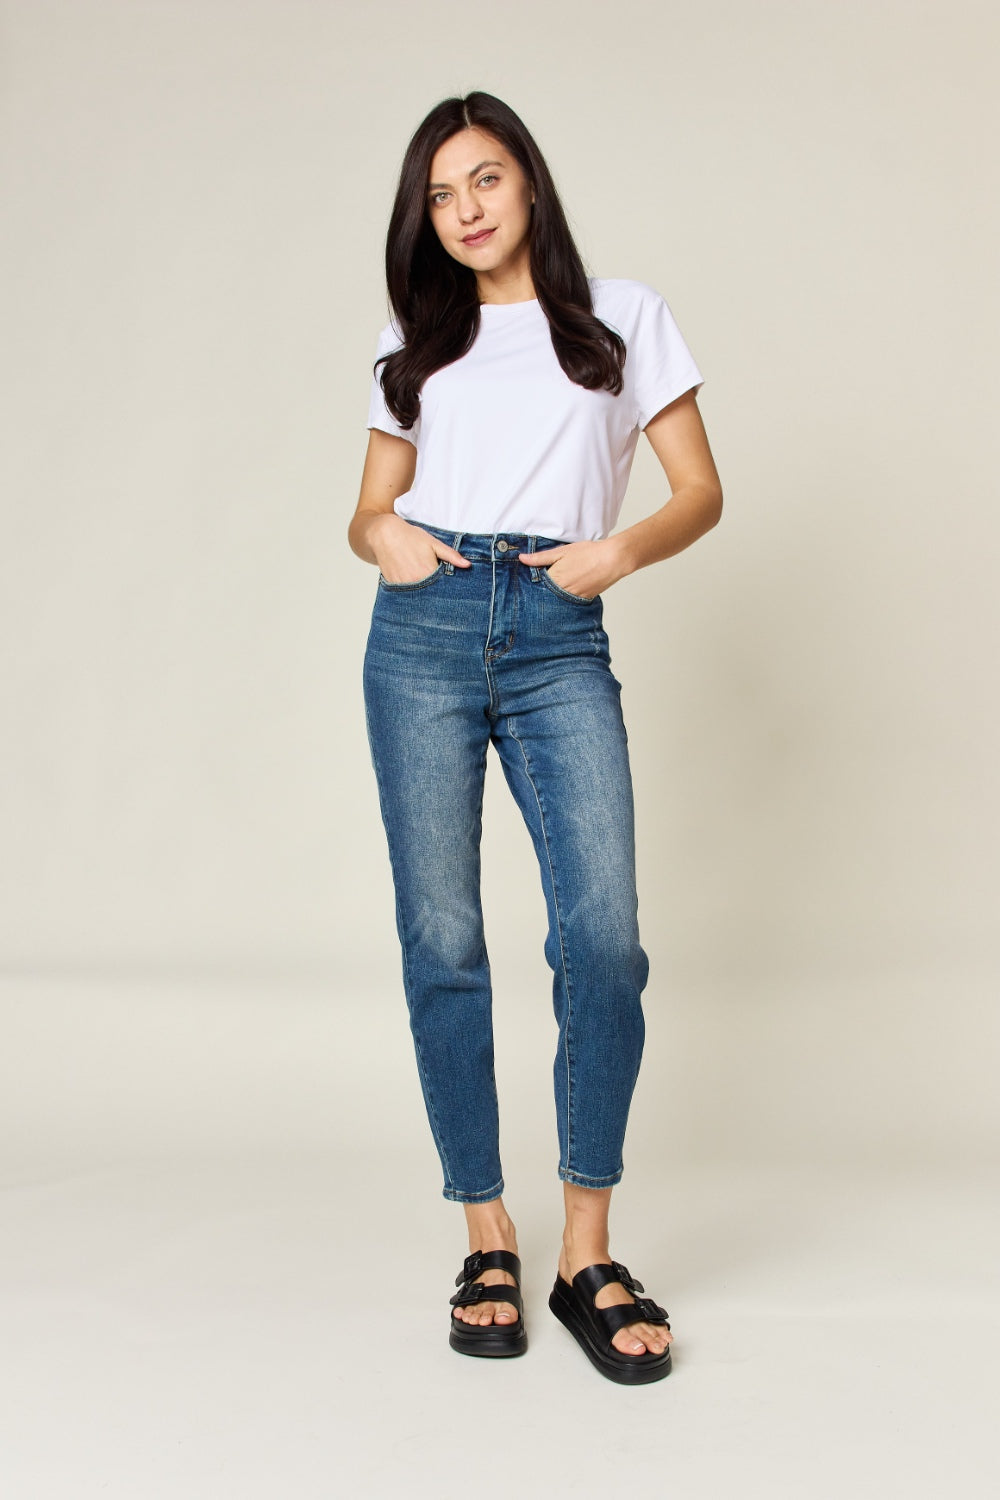 Judy Blue Full Size Tummy Control High Waist Slim Jeans - Grace Ann Faith Boutique - Official Online Boutique 